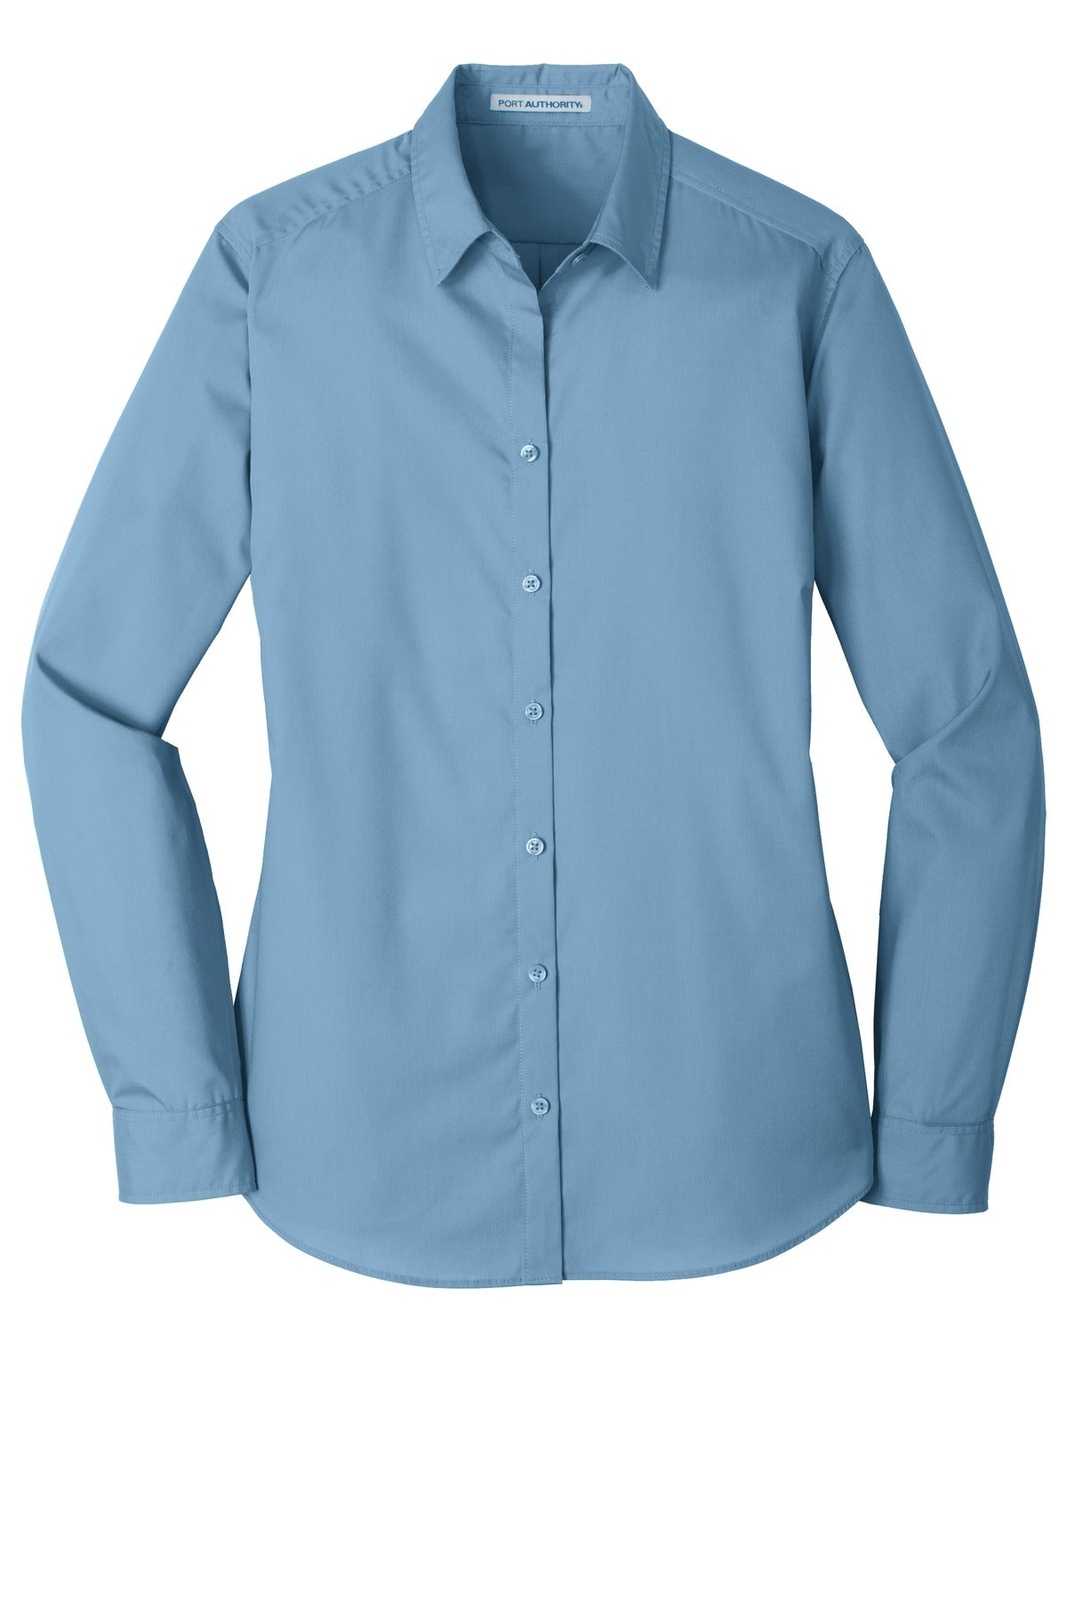 Port Authority LW100 Ladies Long Sleeve Carefree Poplin Shirt - Carolina Blue - HIT a Double - 5